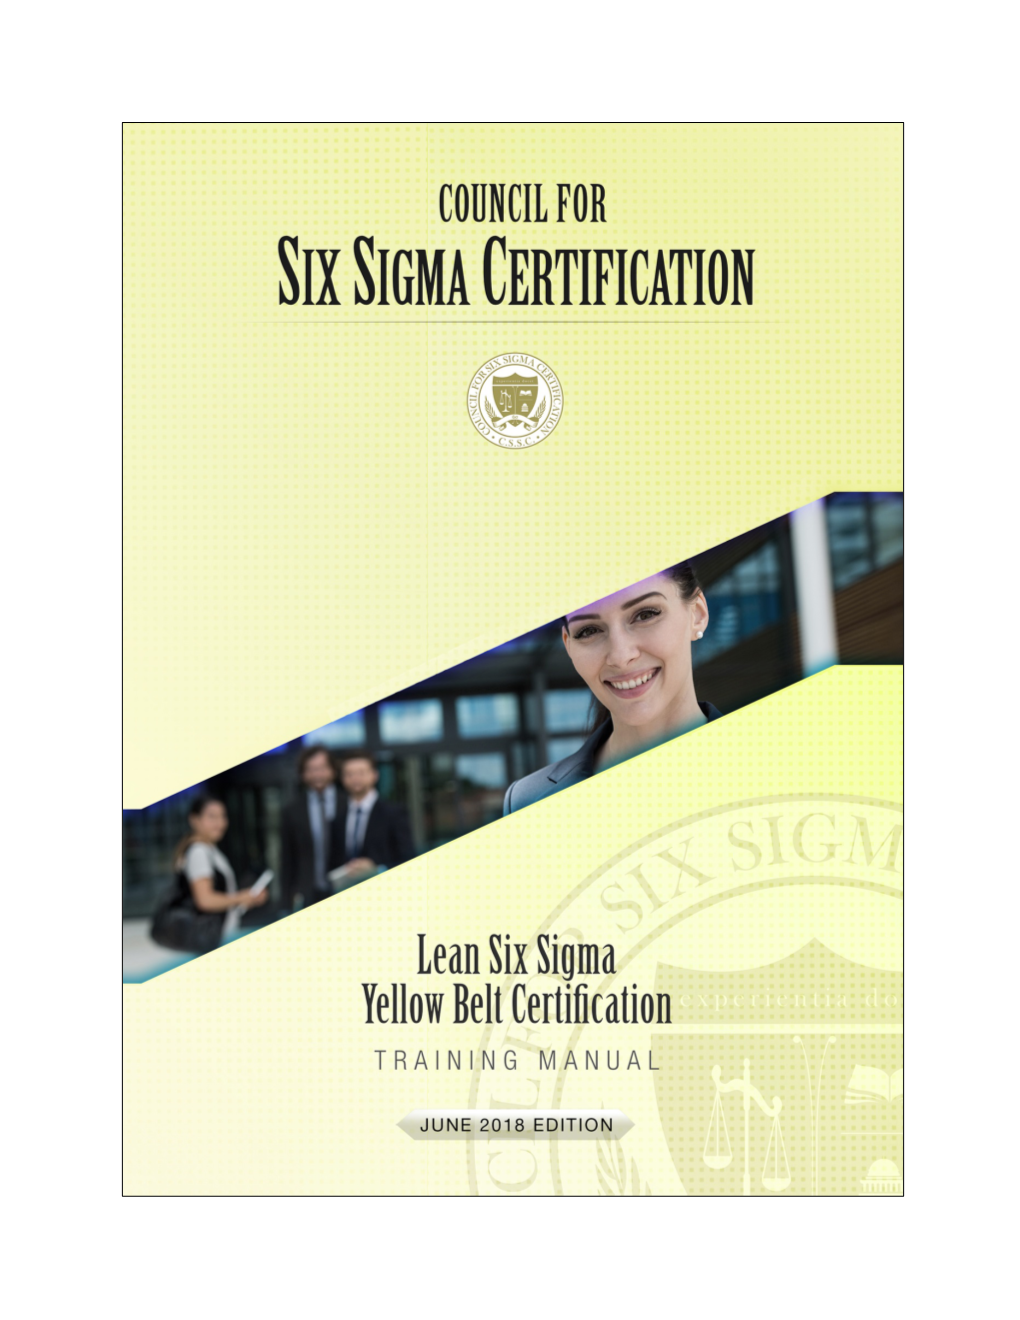 Lean Six Sigma Yellow Belt Certification Training Manual